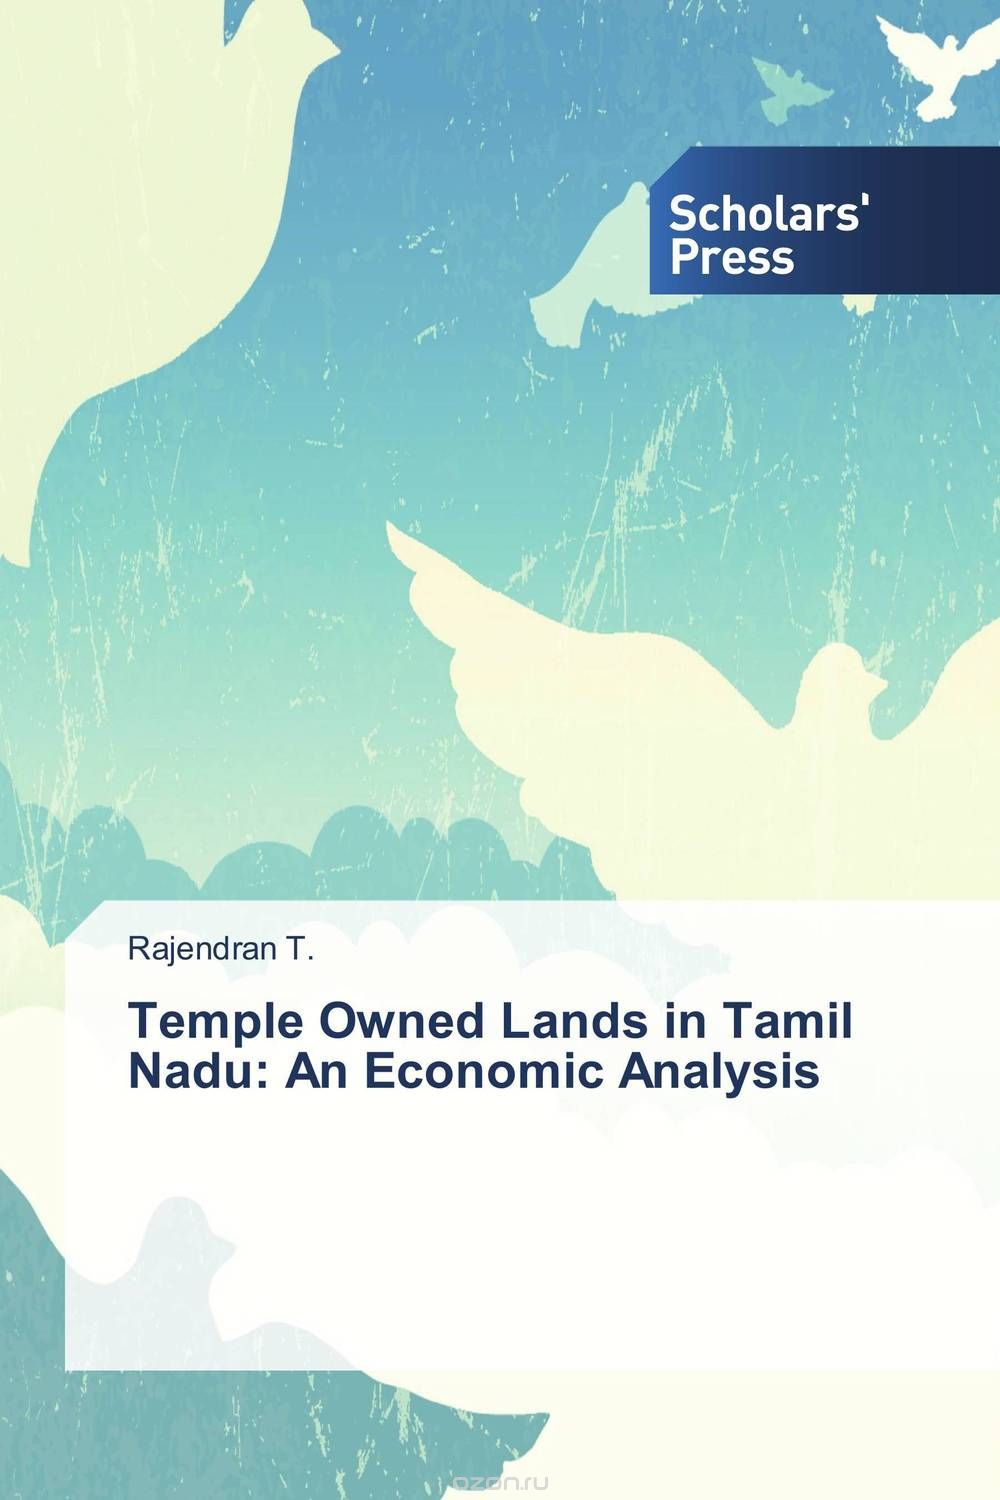 Скачать книгу "Temple Owned Lands in Tamil Nadu: An Economic Analysis"